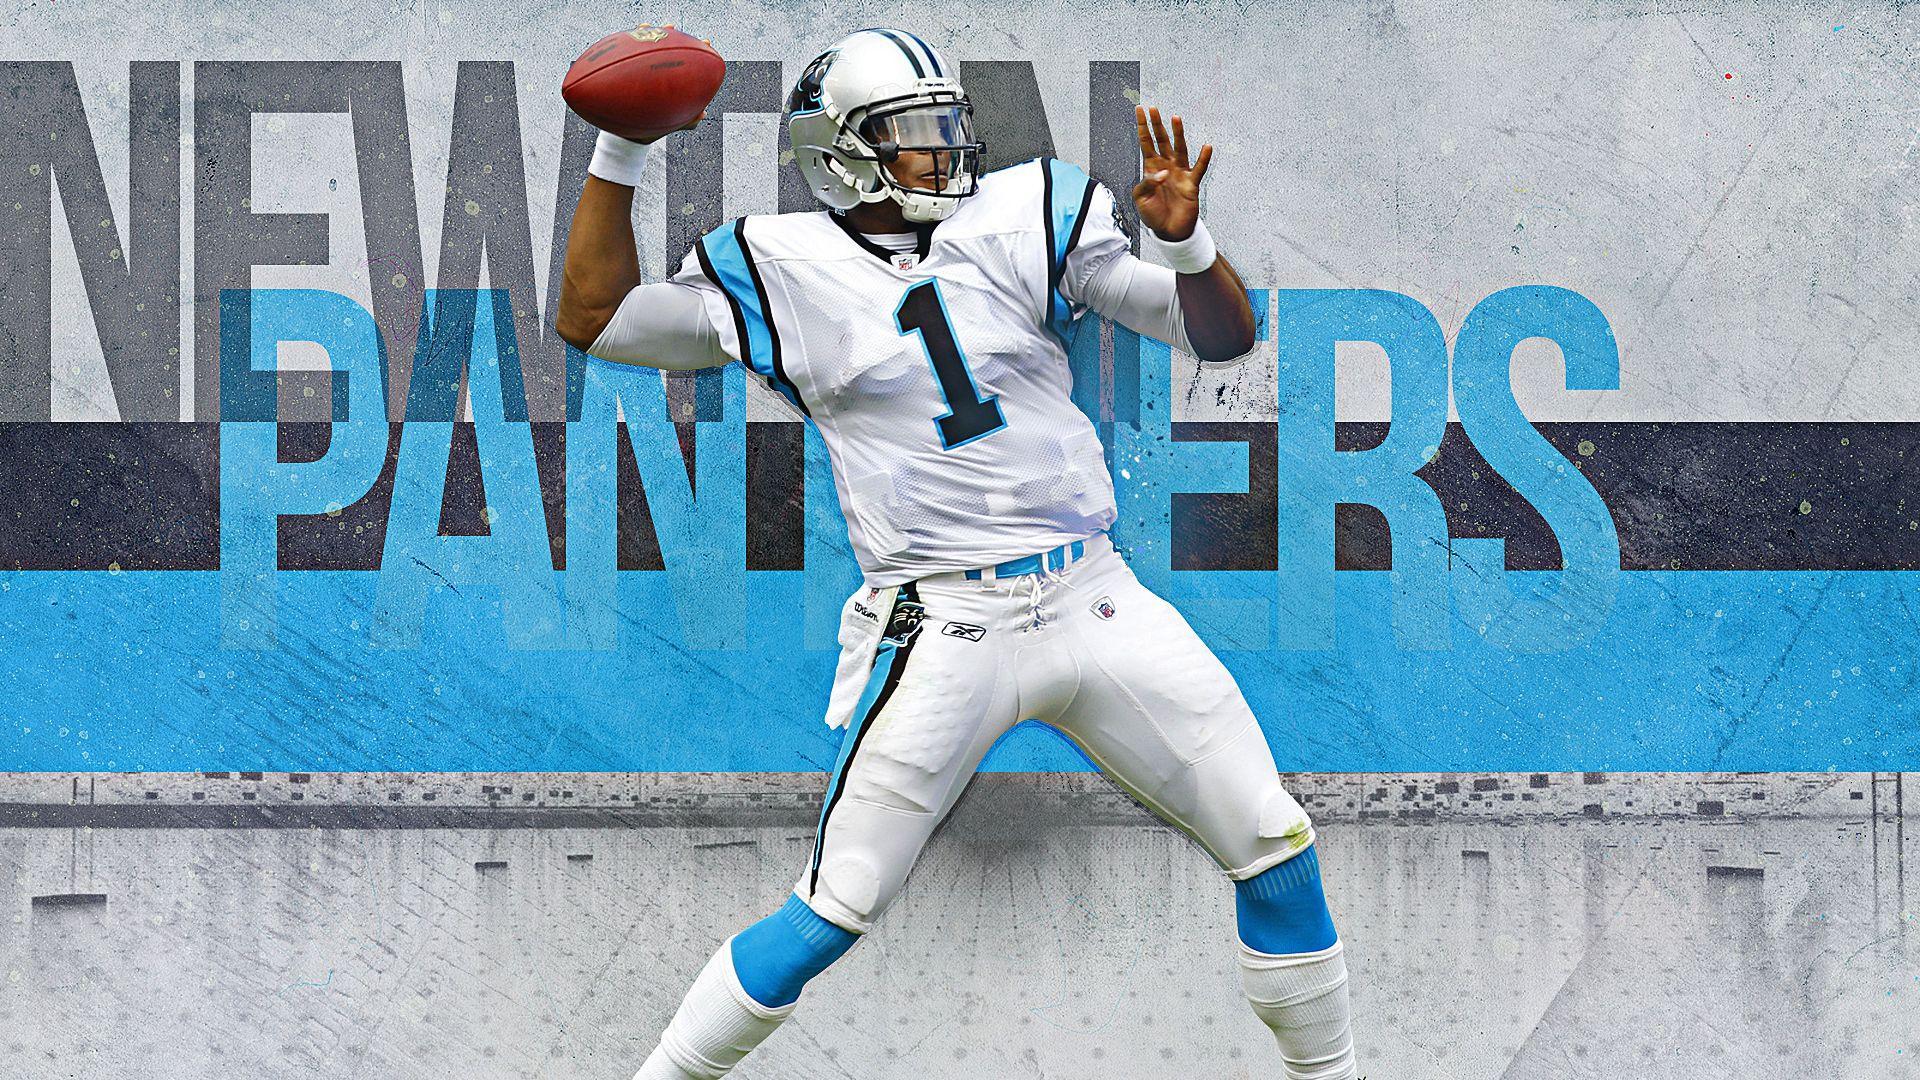 Carolina Panthers Wallpaper HD. Wallpaper, Background, Image